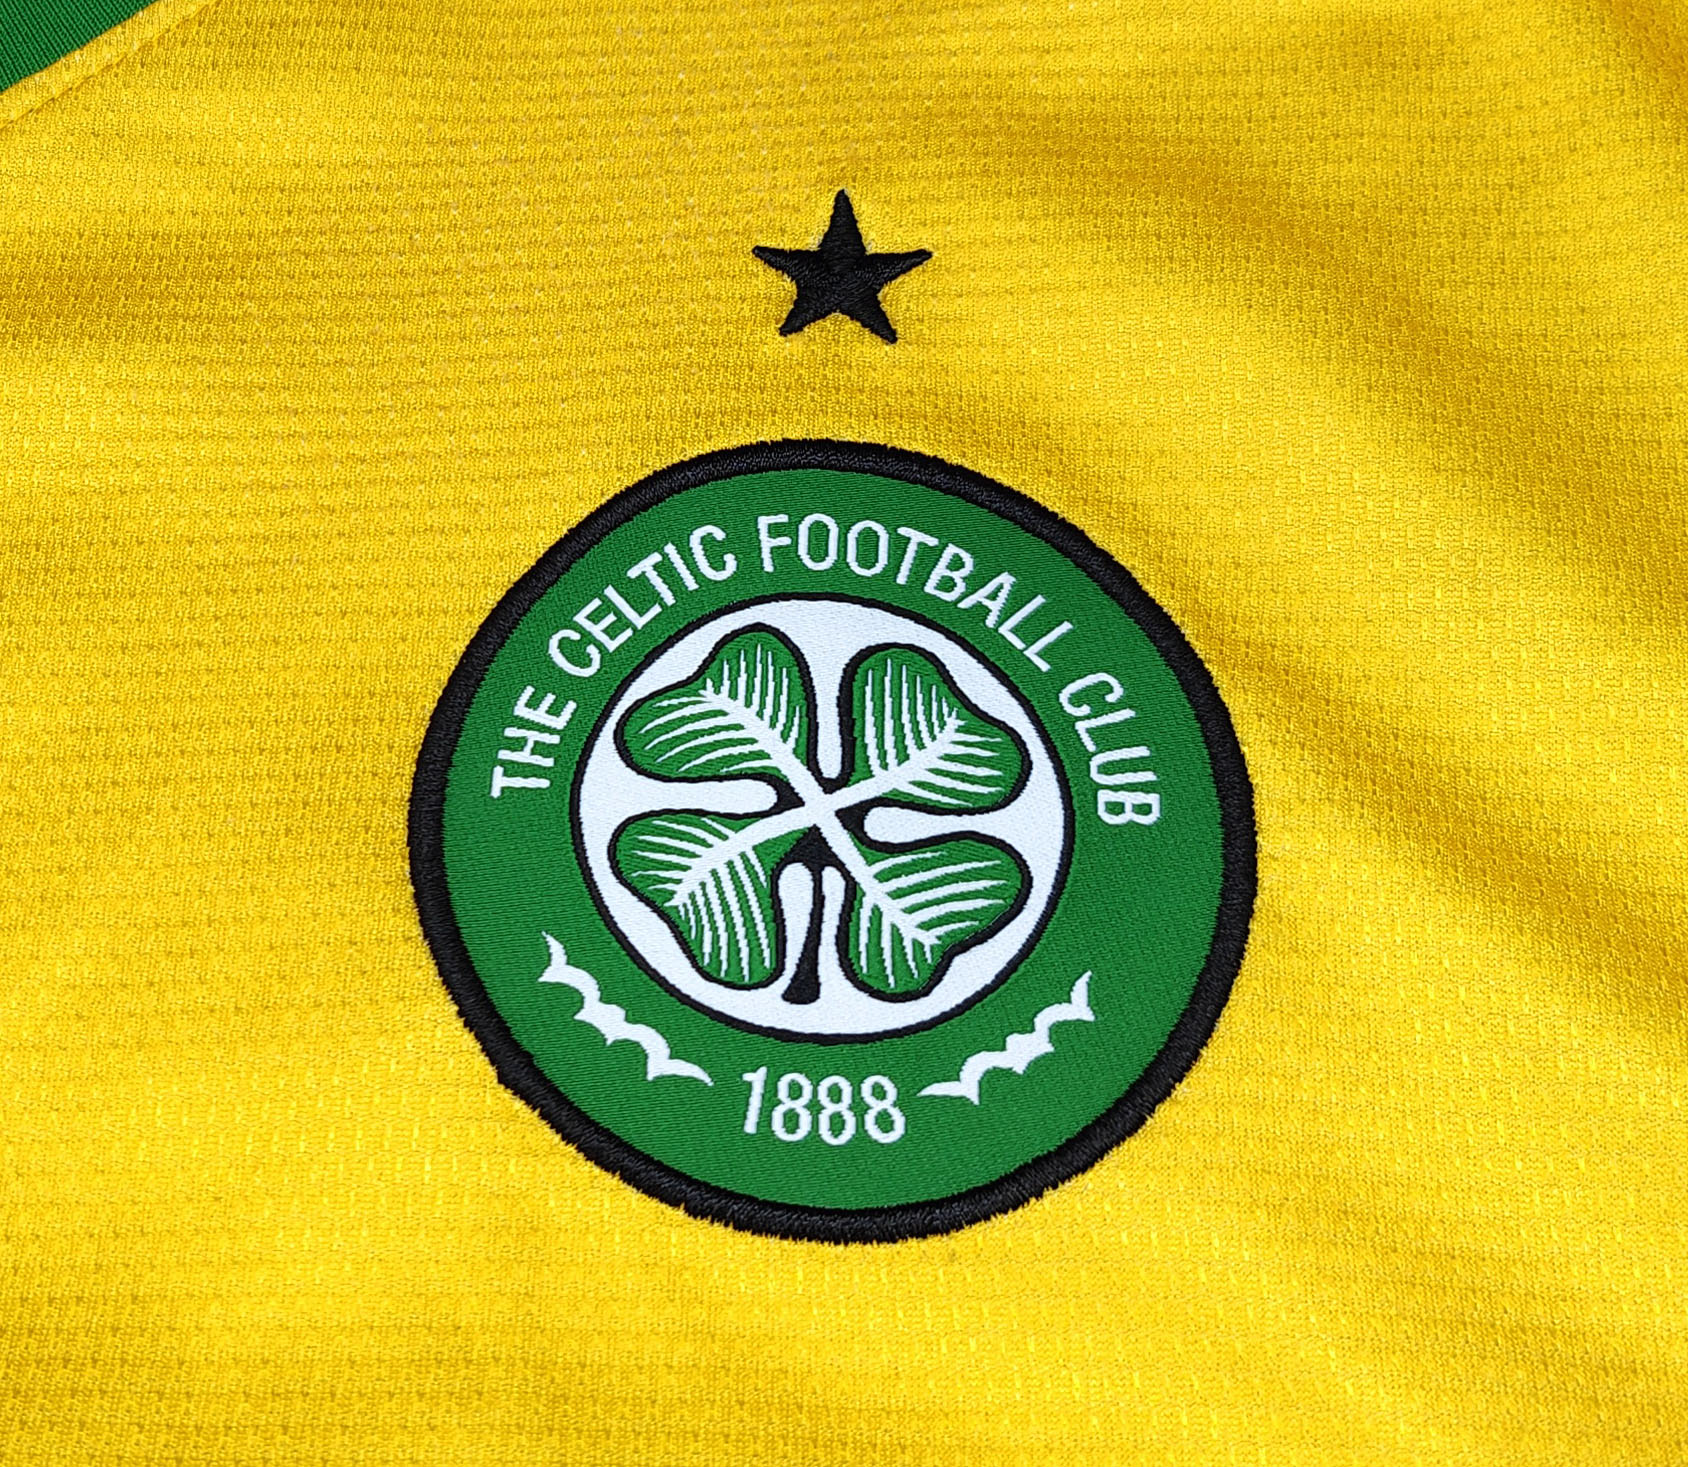 Maglia Celtic 2013-2014 Nike novità le hoops verdi divise in 7 righe